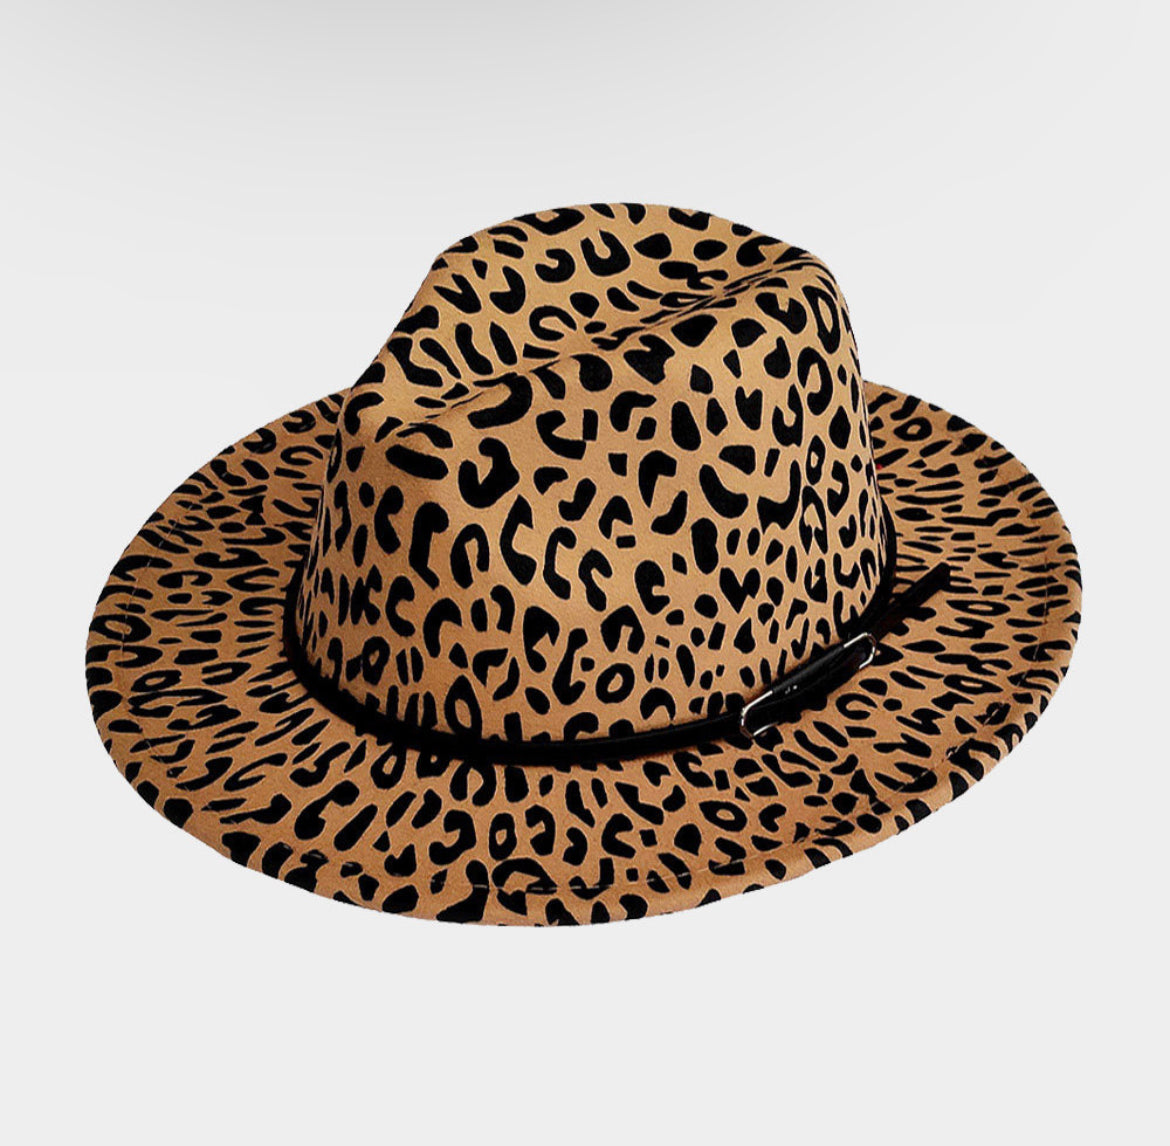 Unisex Fedora Hat